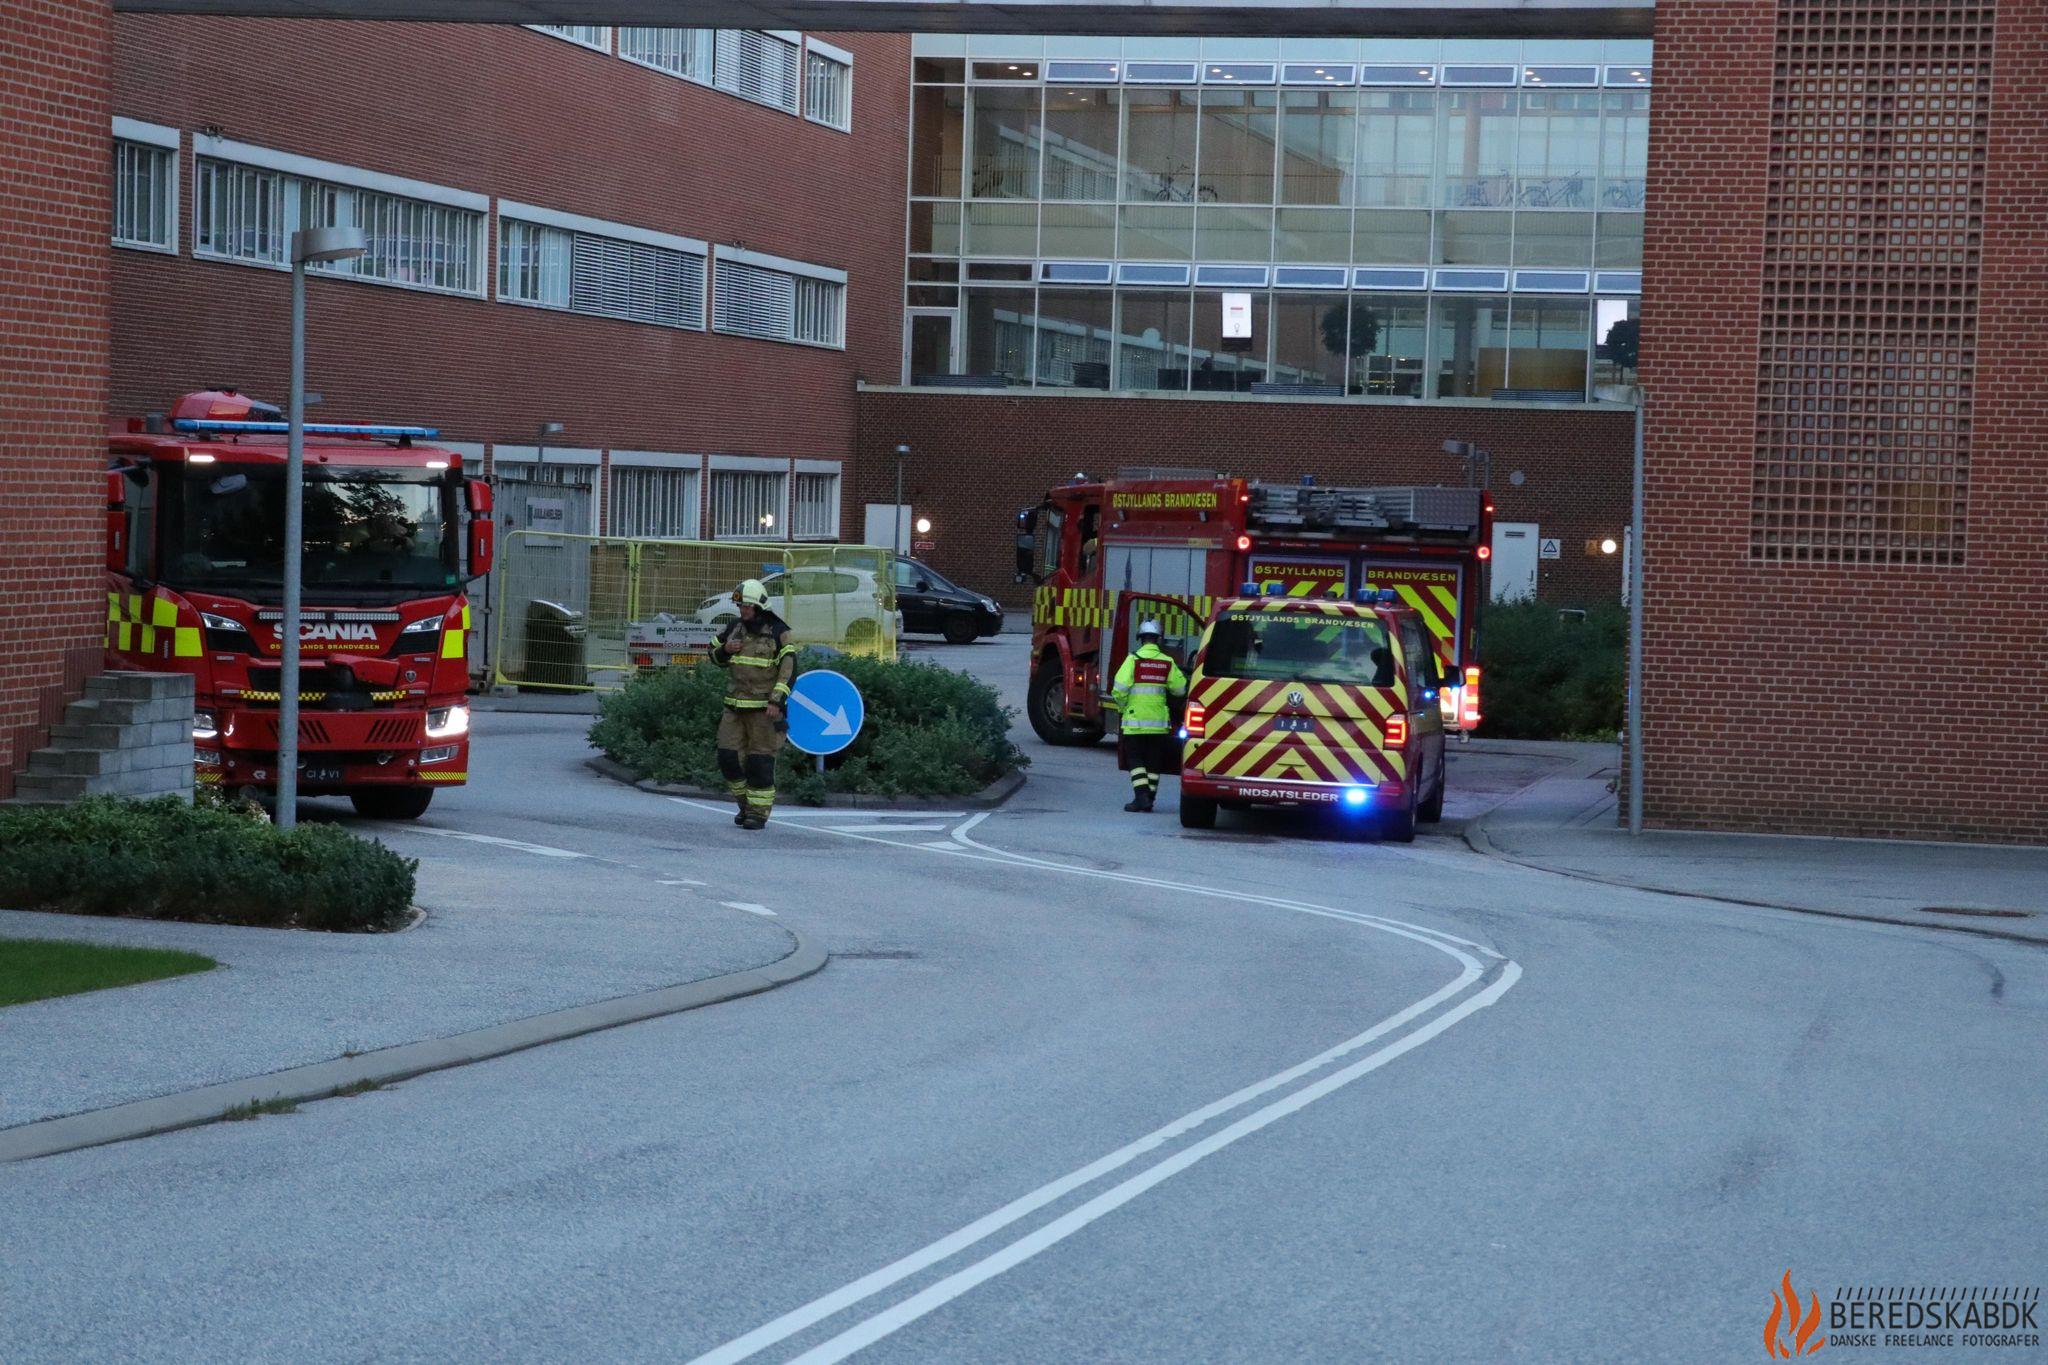 15/07-23 Automatisk Brandalarm på Skejby Sygehus